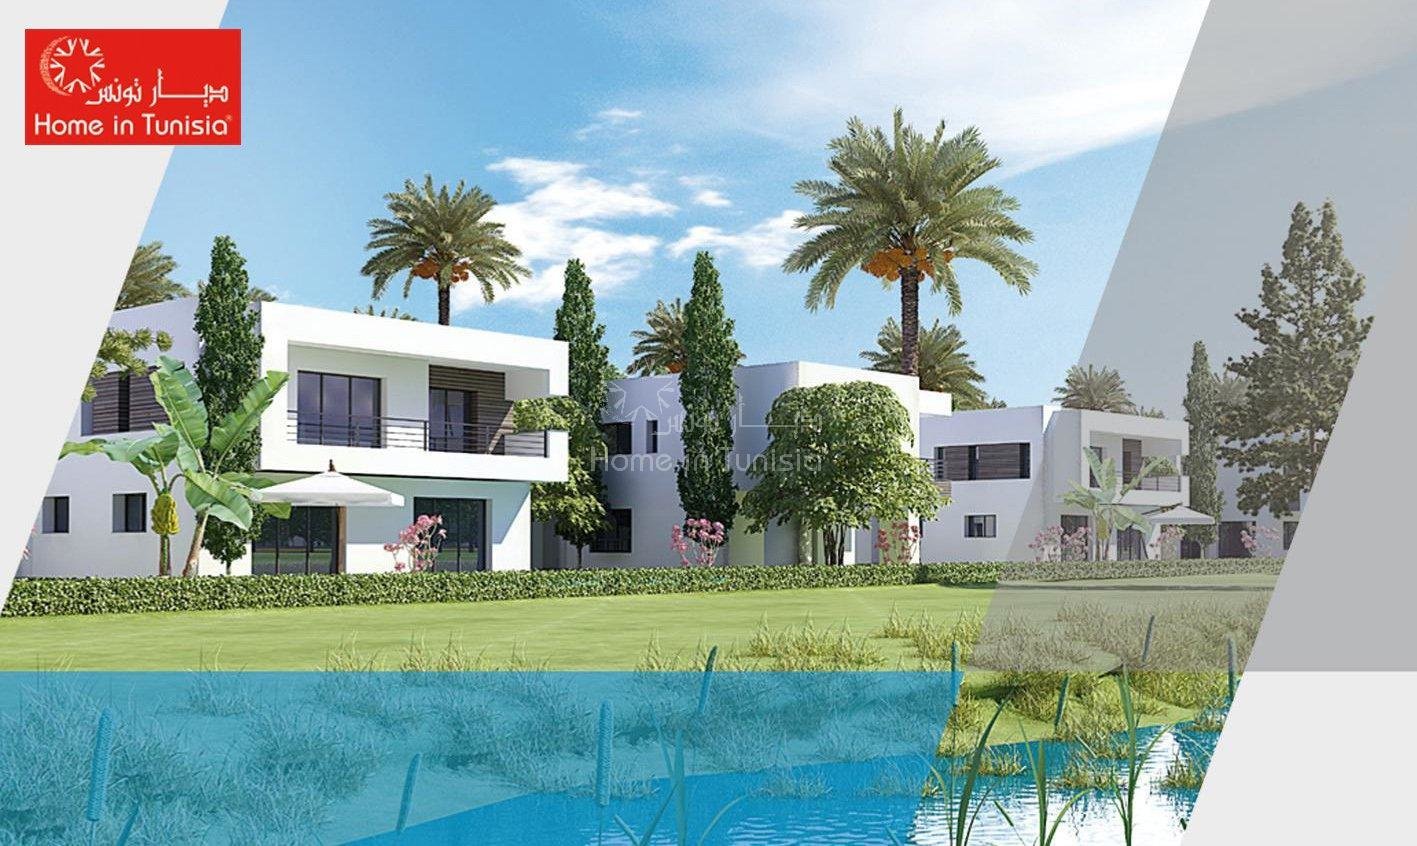 Golf résidence villa Aphrodite 69 isolée Boulevard Meninx Tunis Bay